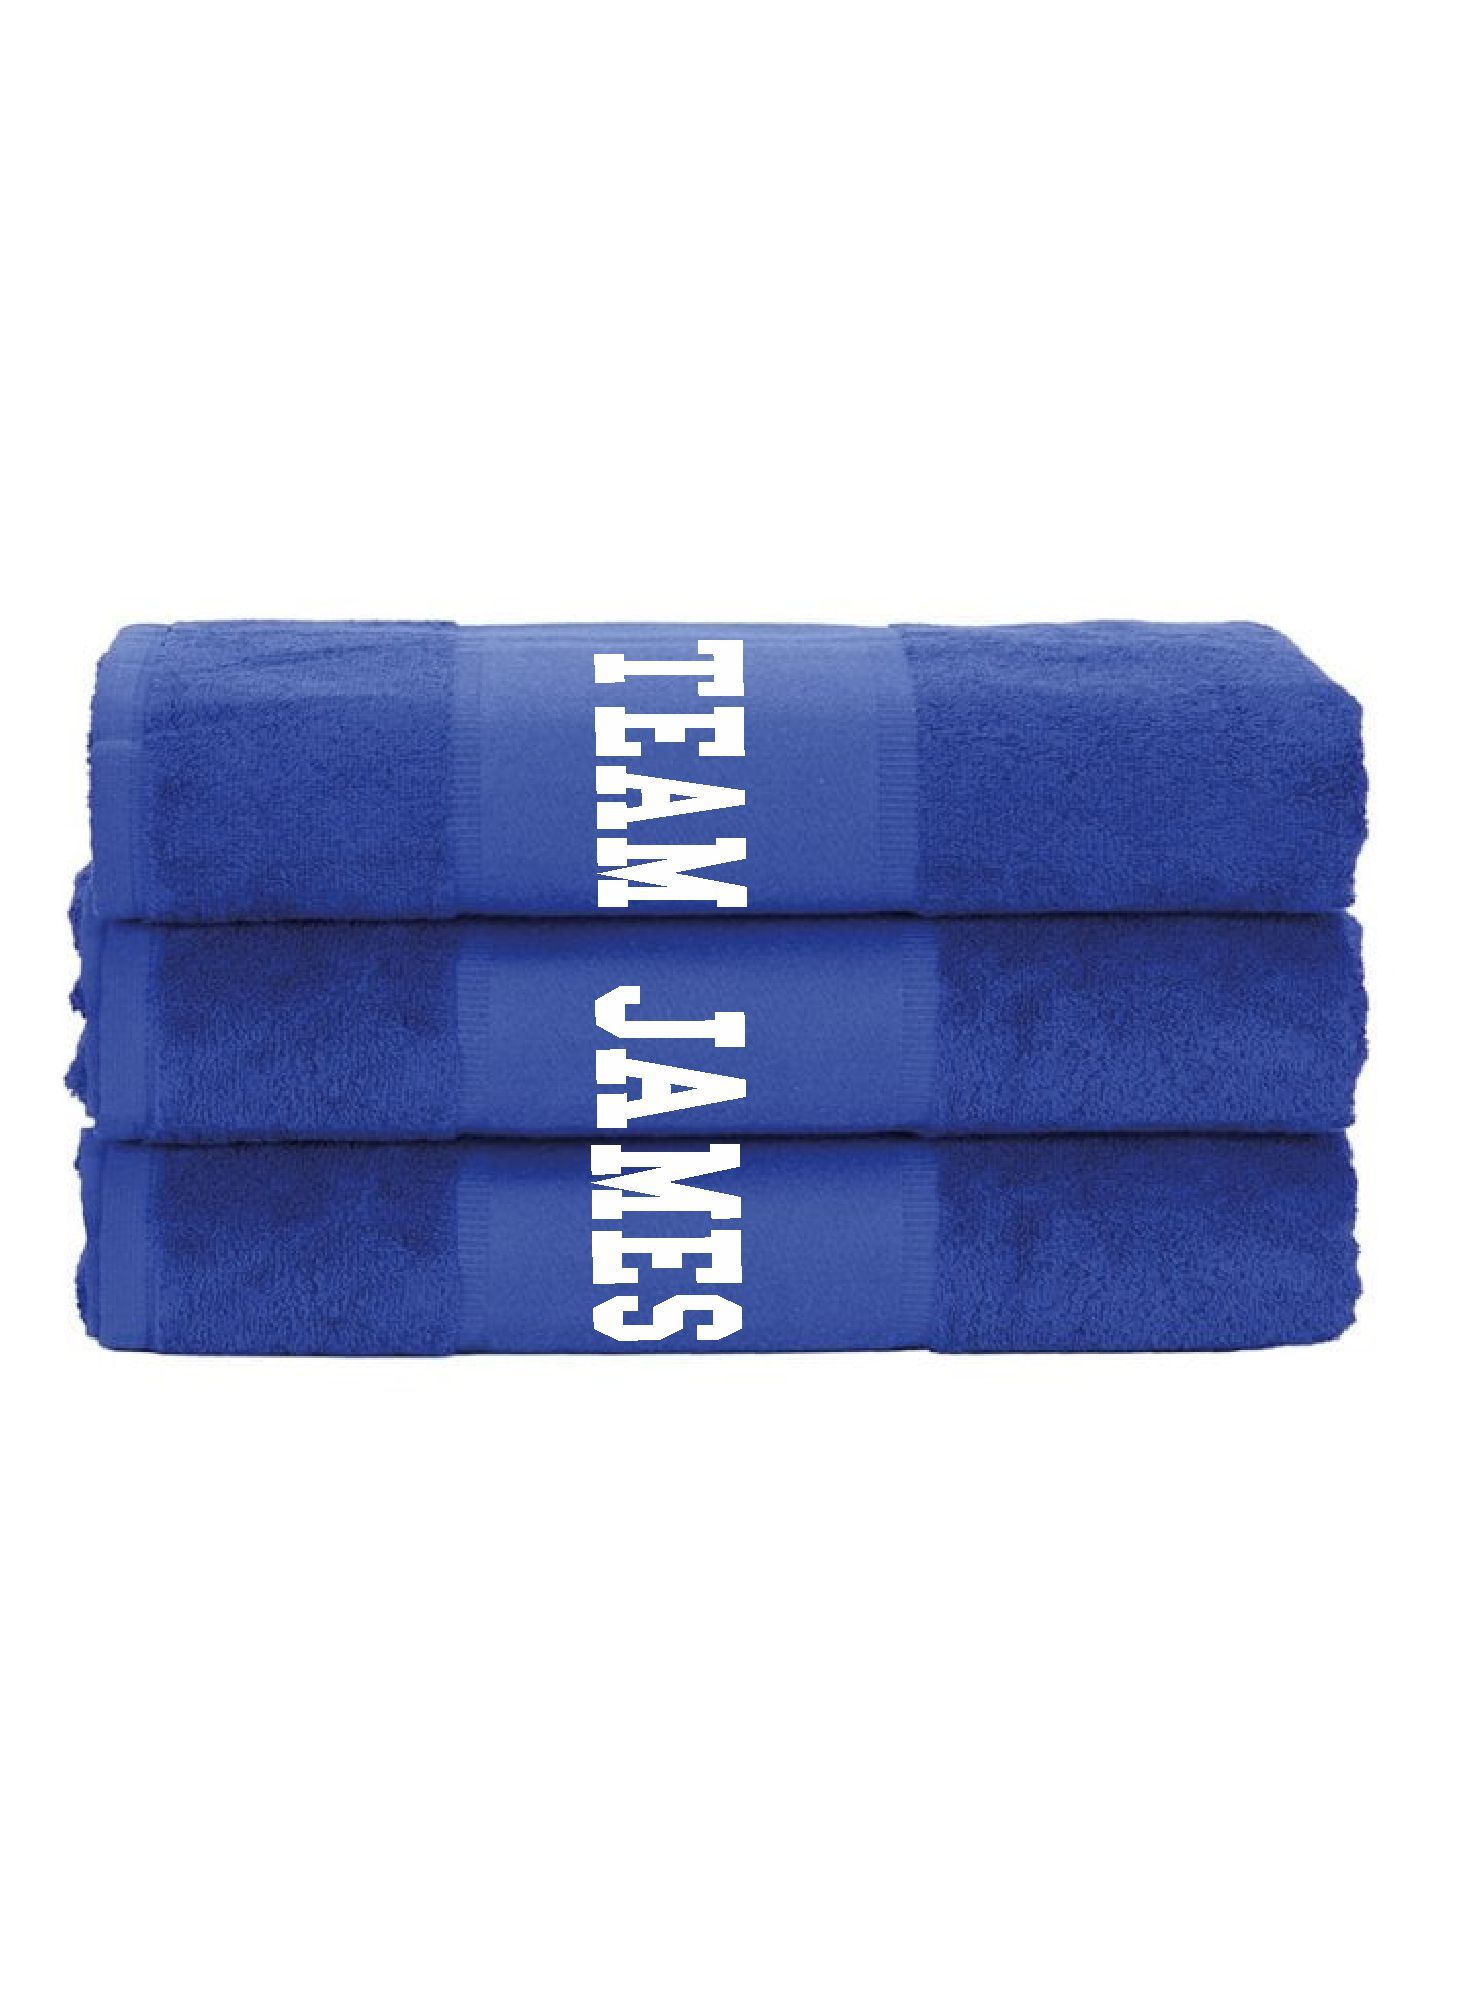 Team James - Hand Towel